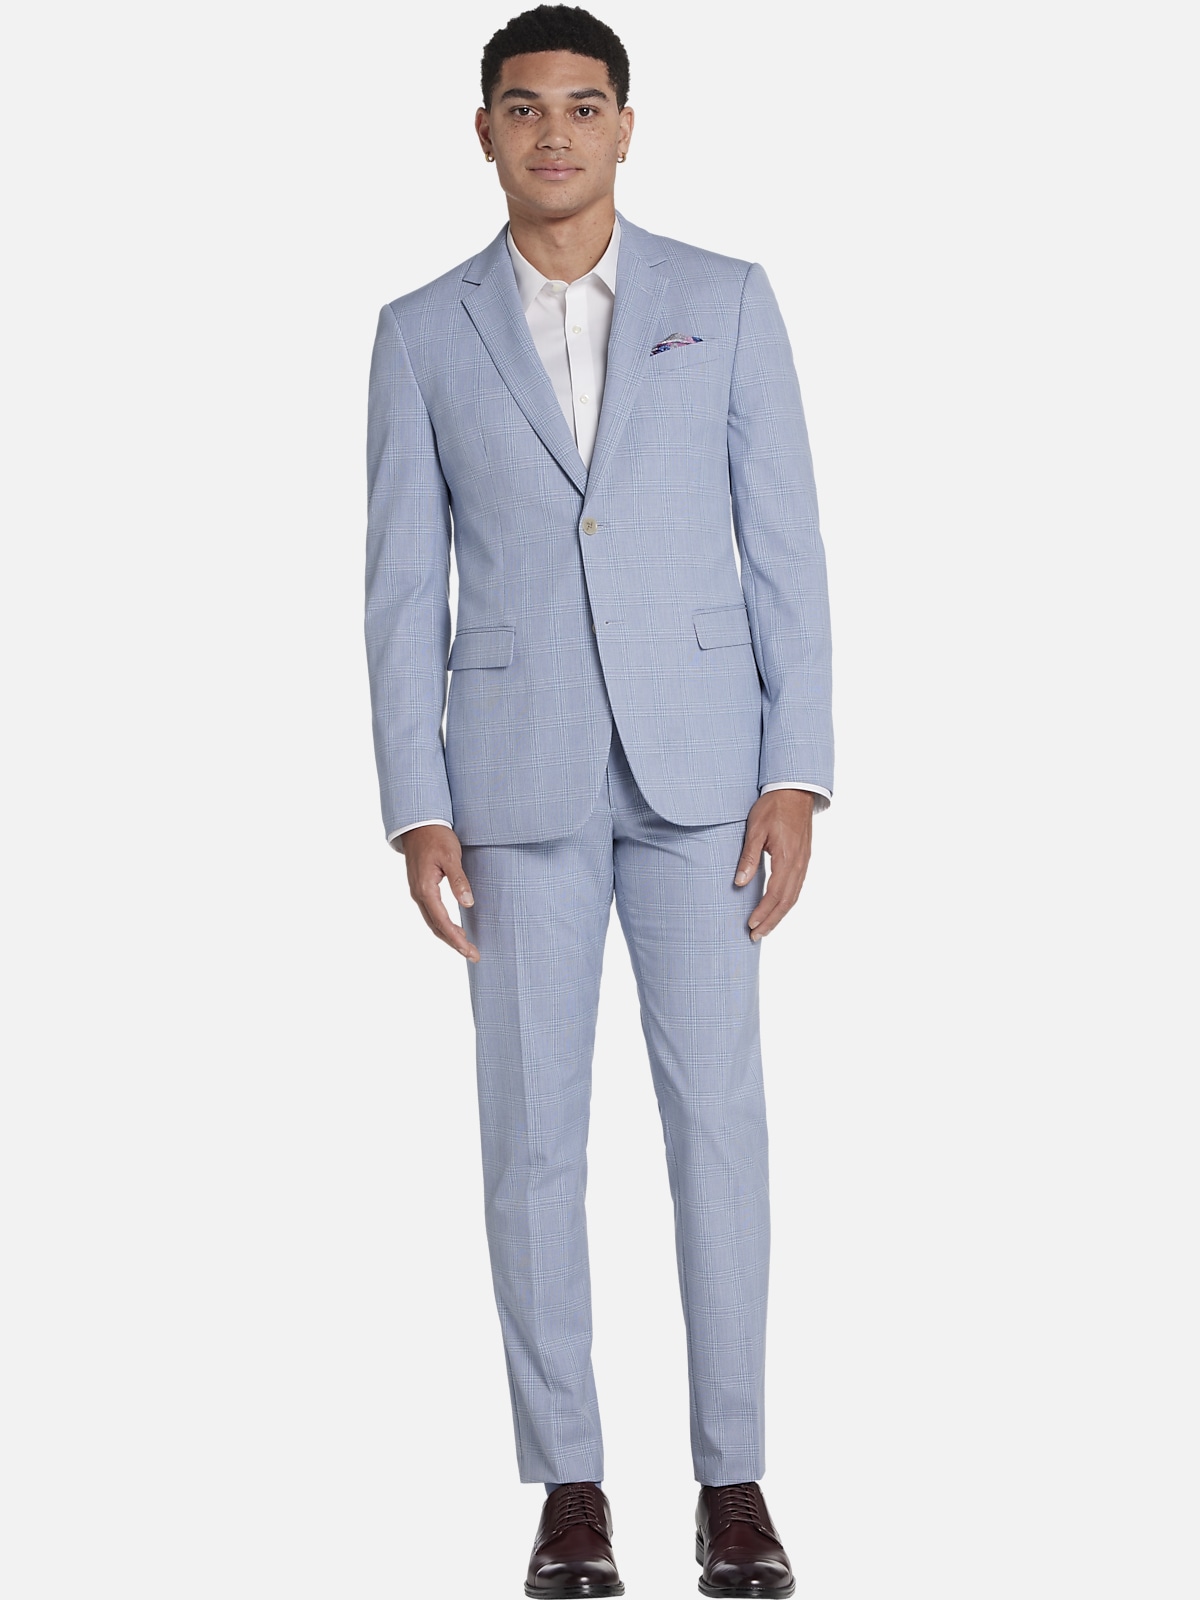 Egara Skinny Fit Plaid Suit Separates Jacket | All Clearance| Men's ...